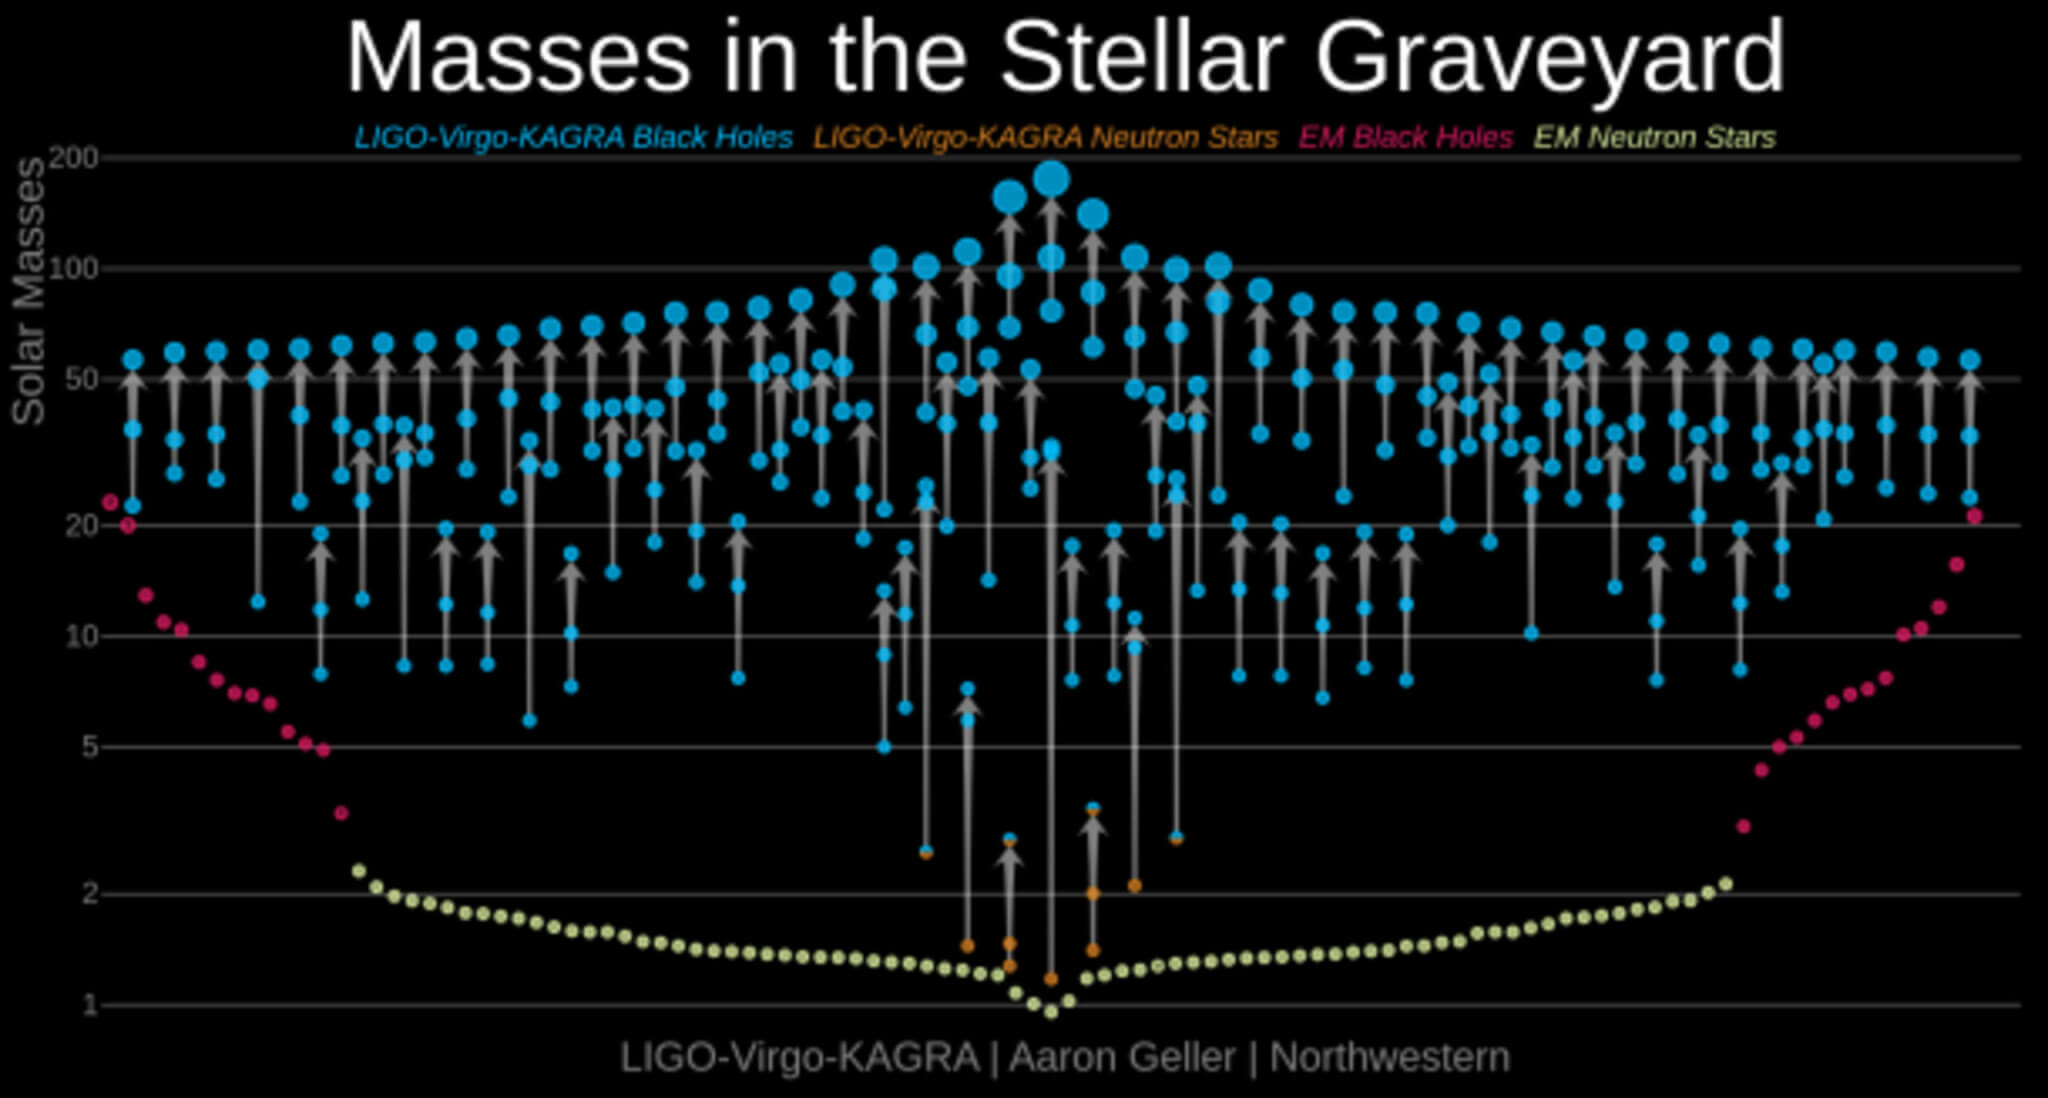 Masses in the stellar graveyard (in units of solar mass)